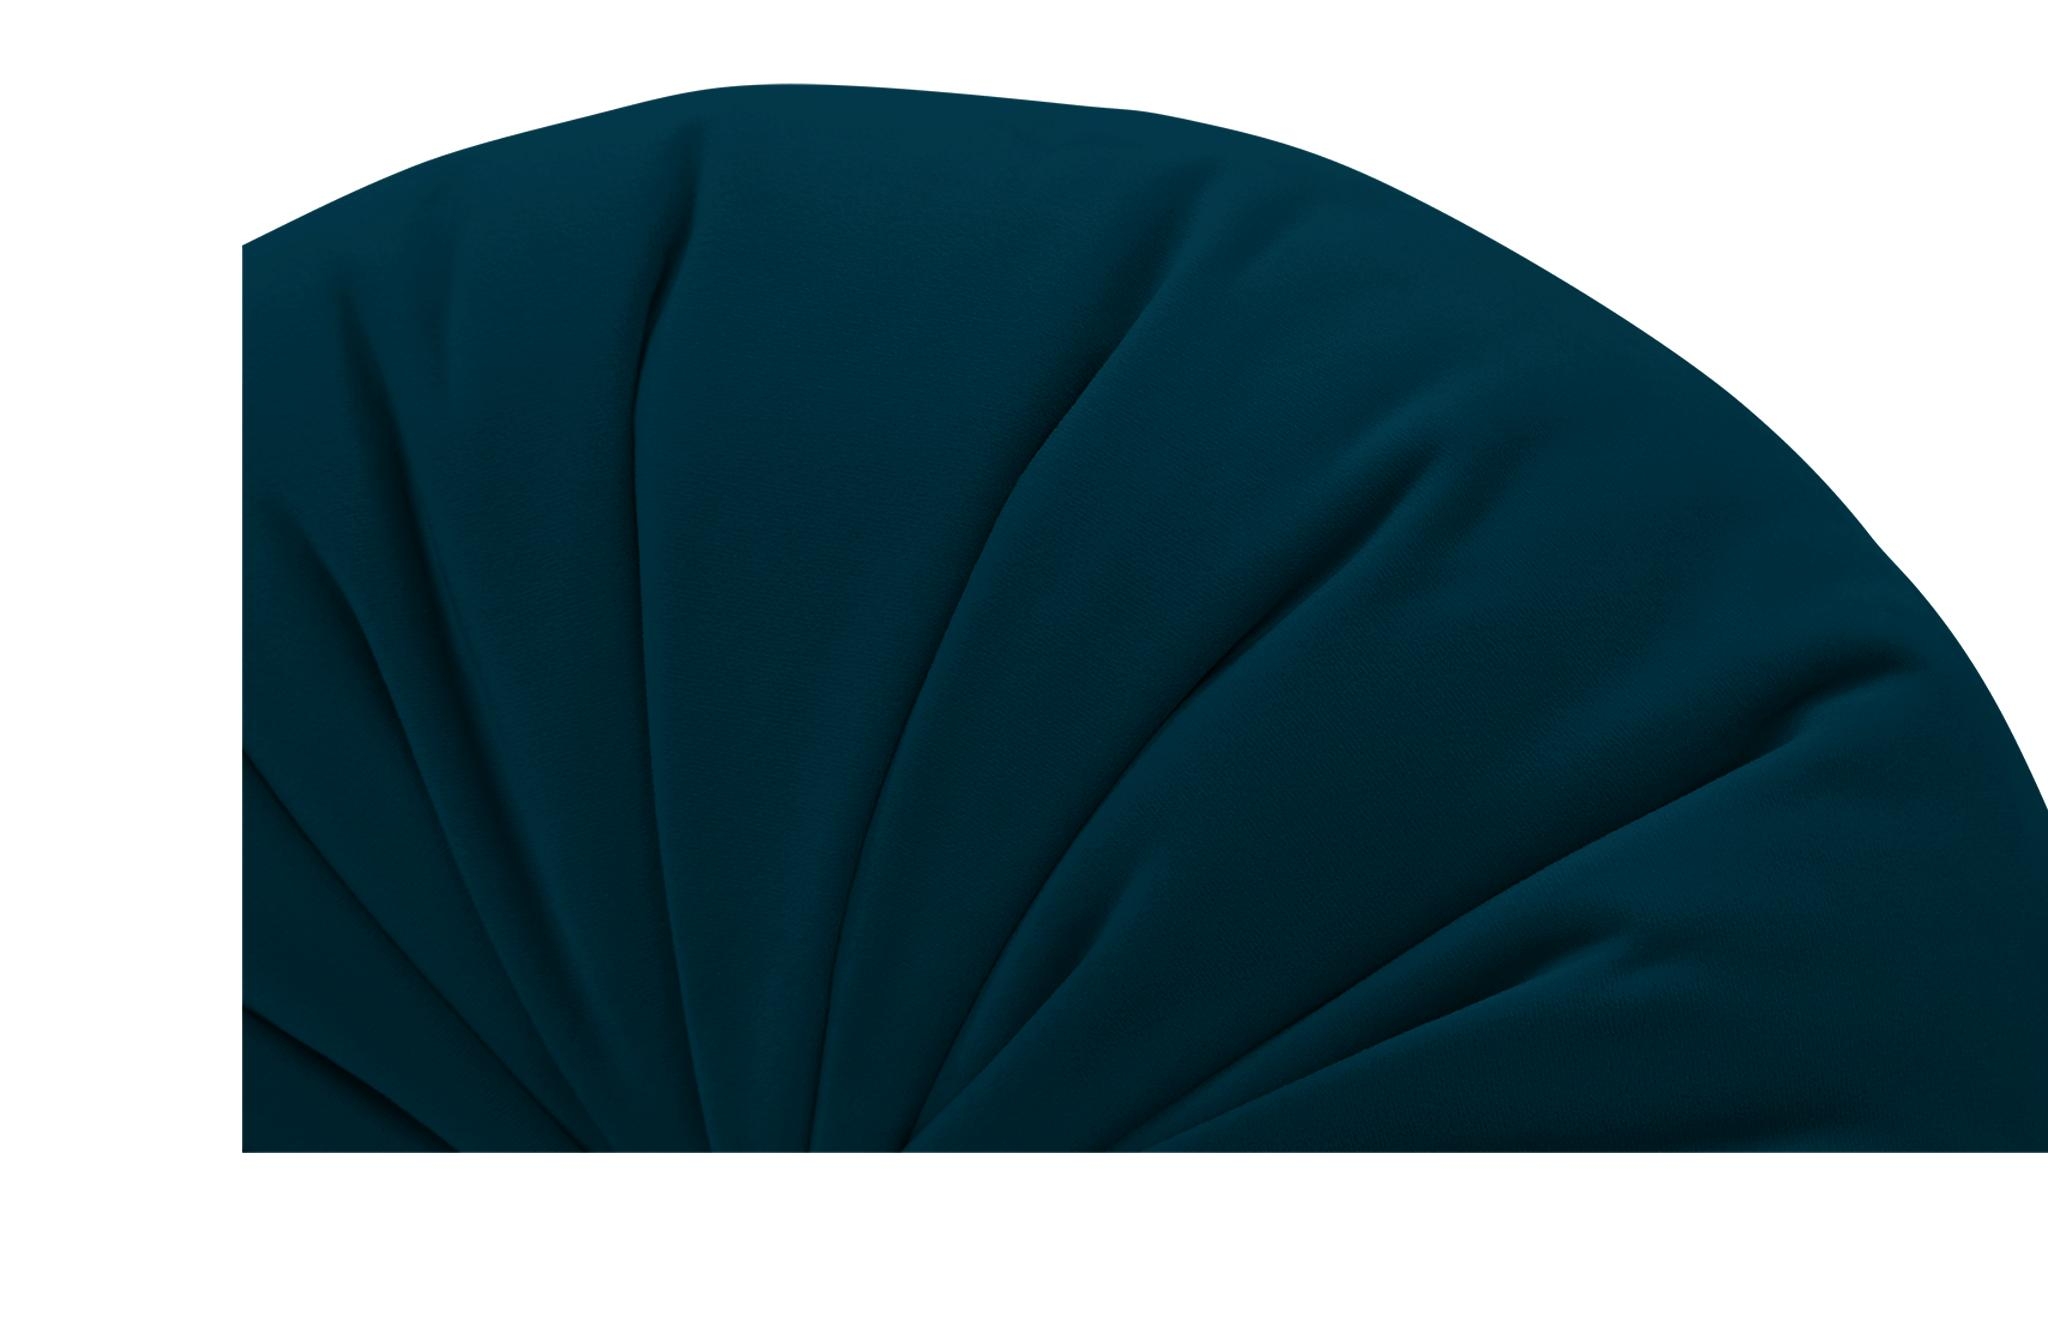 Blue Minka Mid Century Modern Pleated Round Pillow - Key Largo Zenith Teal - Image 1